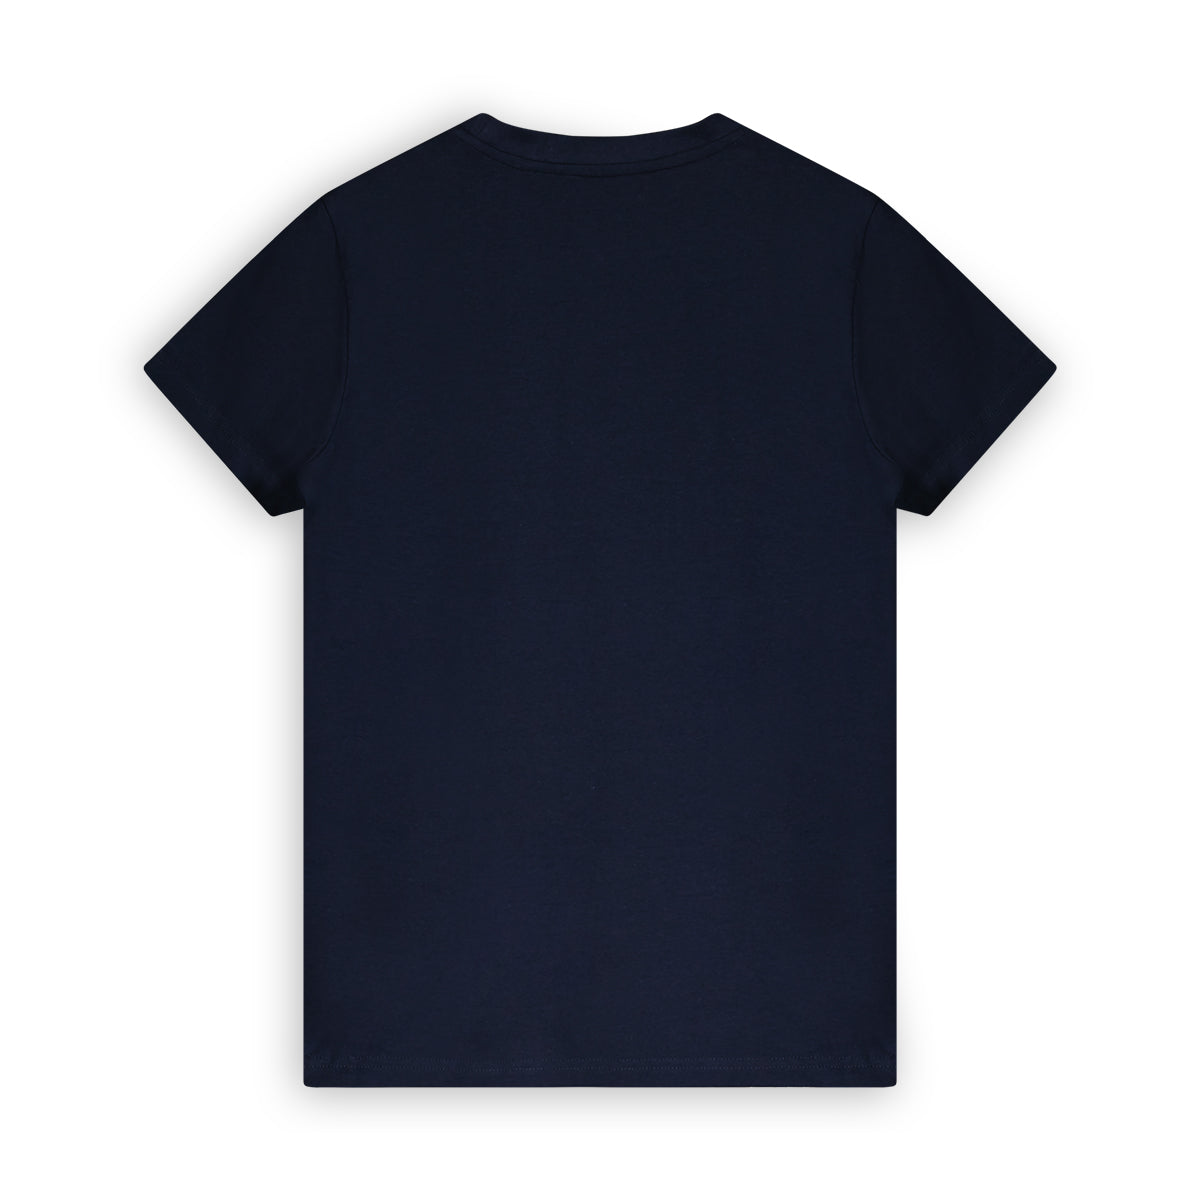 Stijn T-shirt Urban Navy